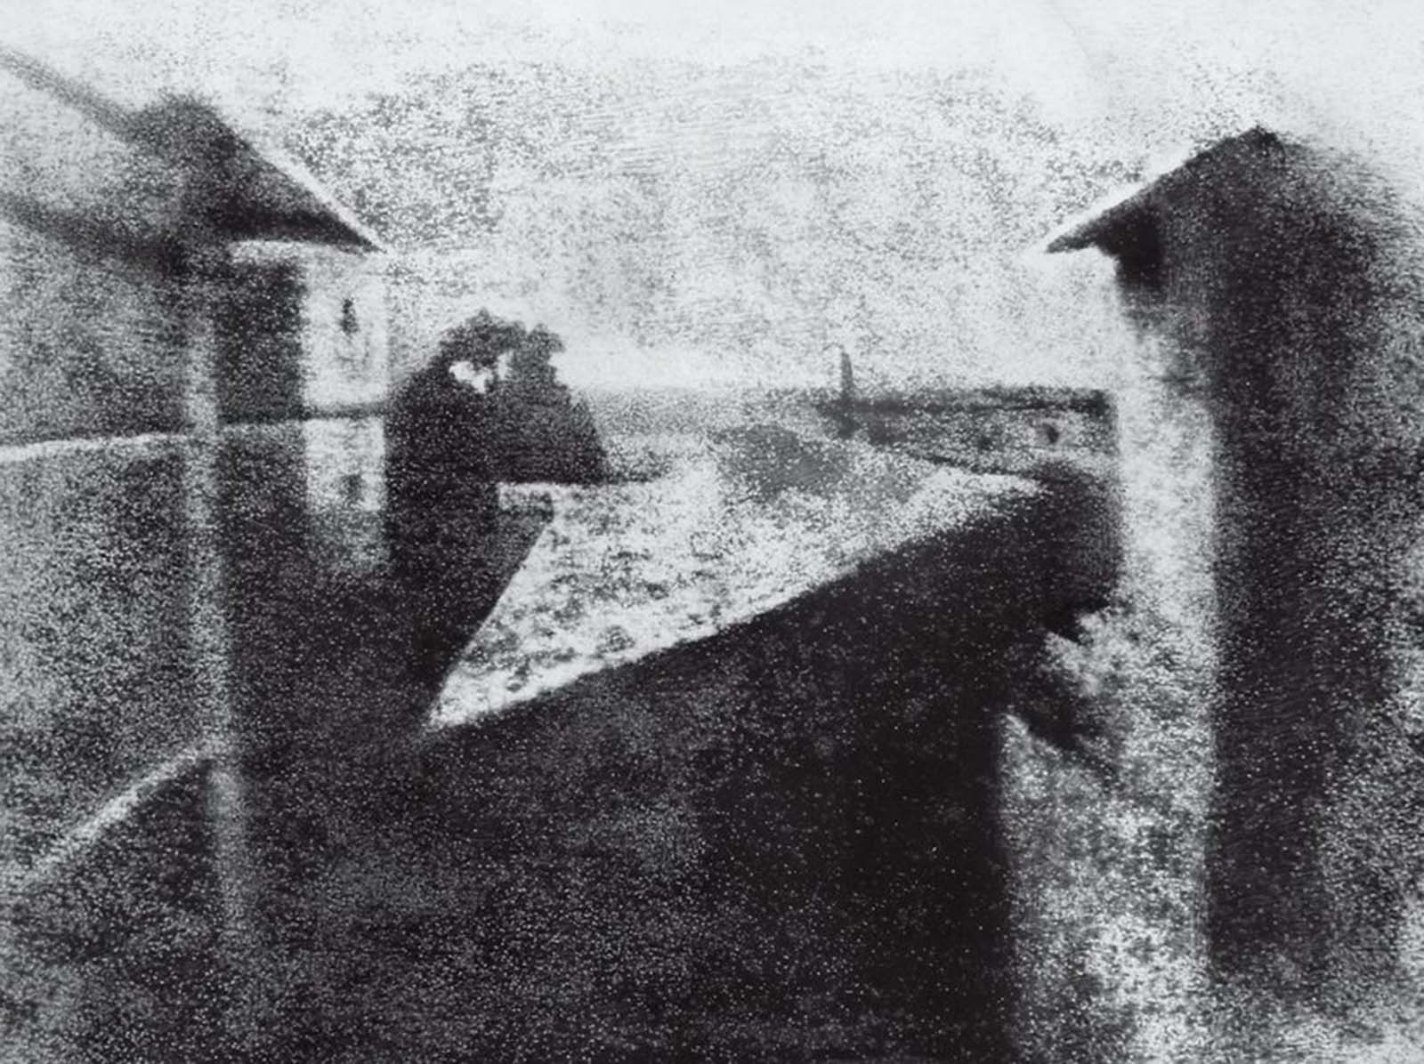 historical photos: Le Gras, Joseph Nicéphore Niépce, 1826.